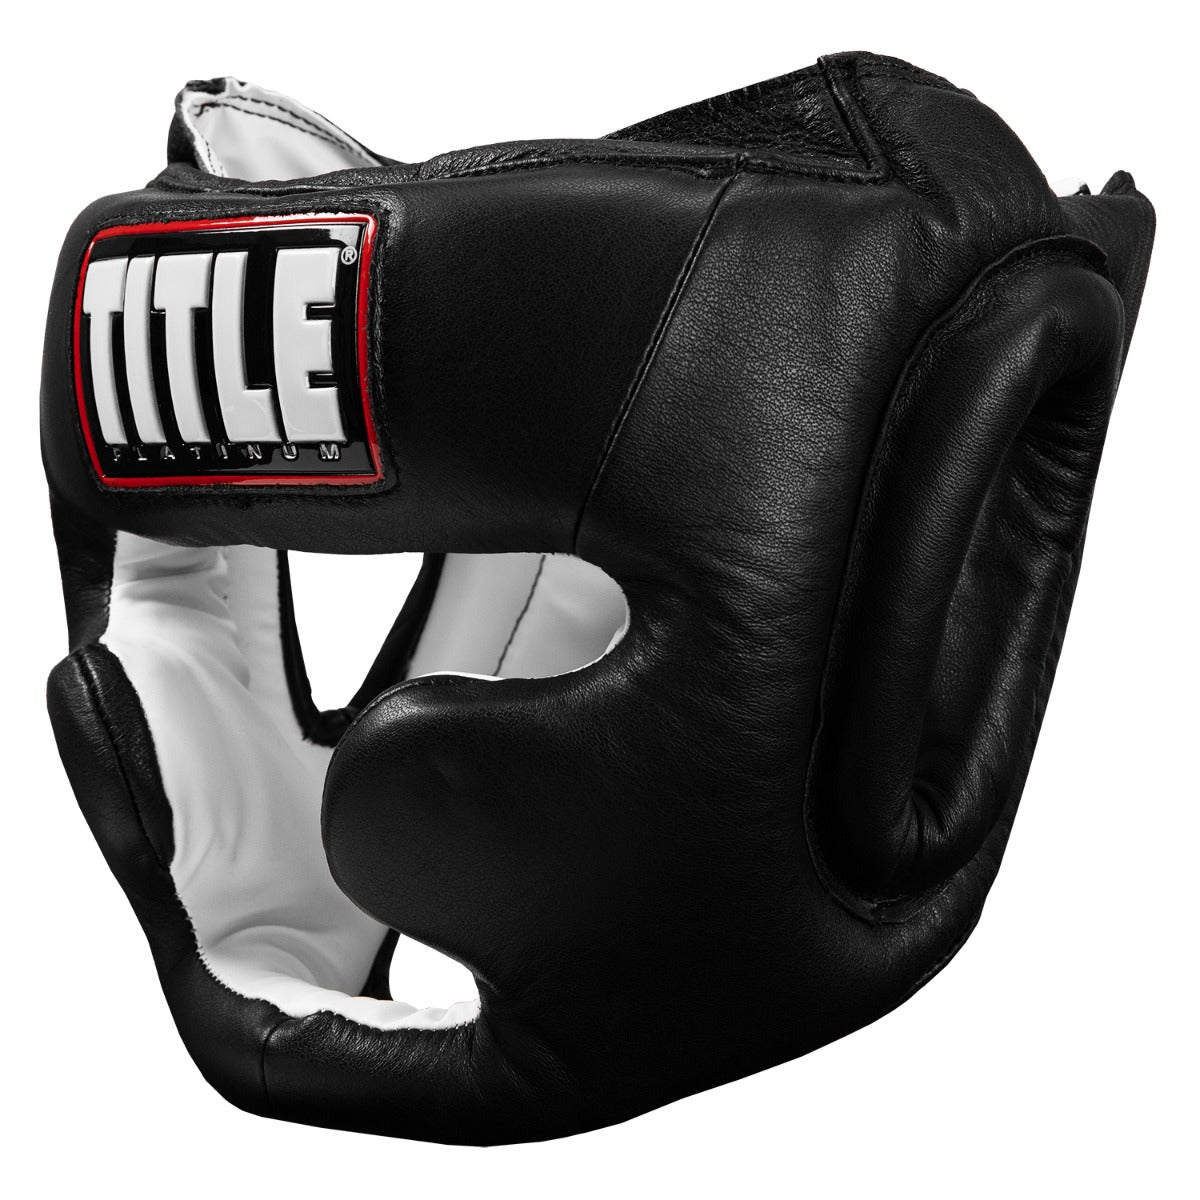 Title Boxing Headgear Size Chart